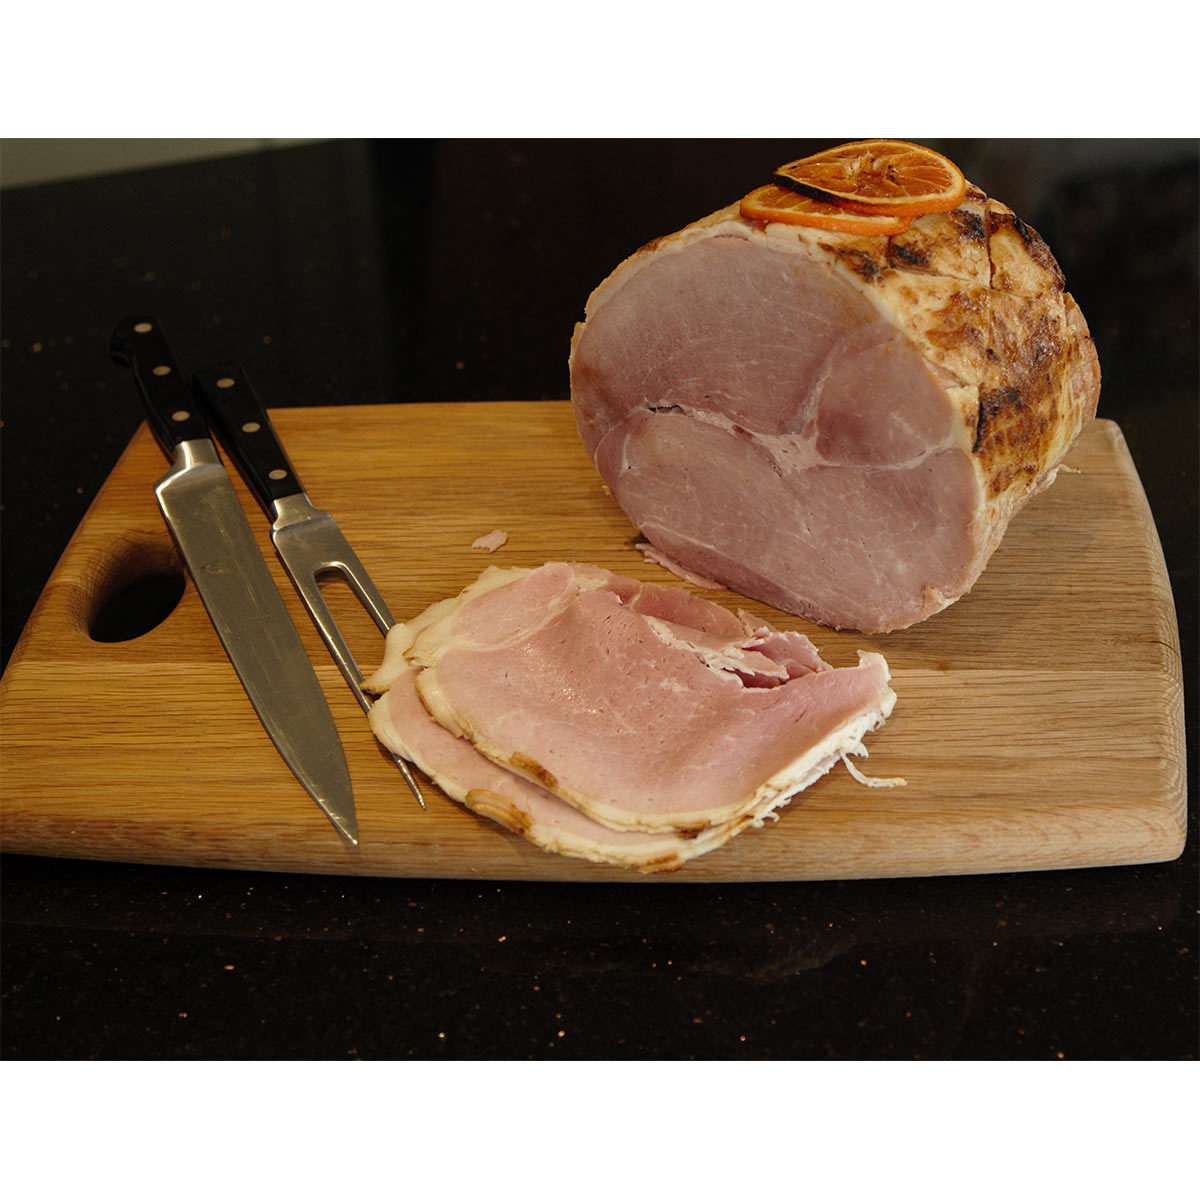 Lane Farm Suffolk Cooked Ham with Orange Marmalade Glaze, 2kg (Serves 20-25 people)